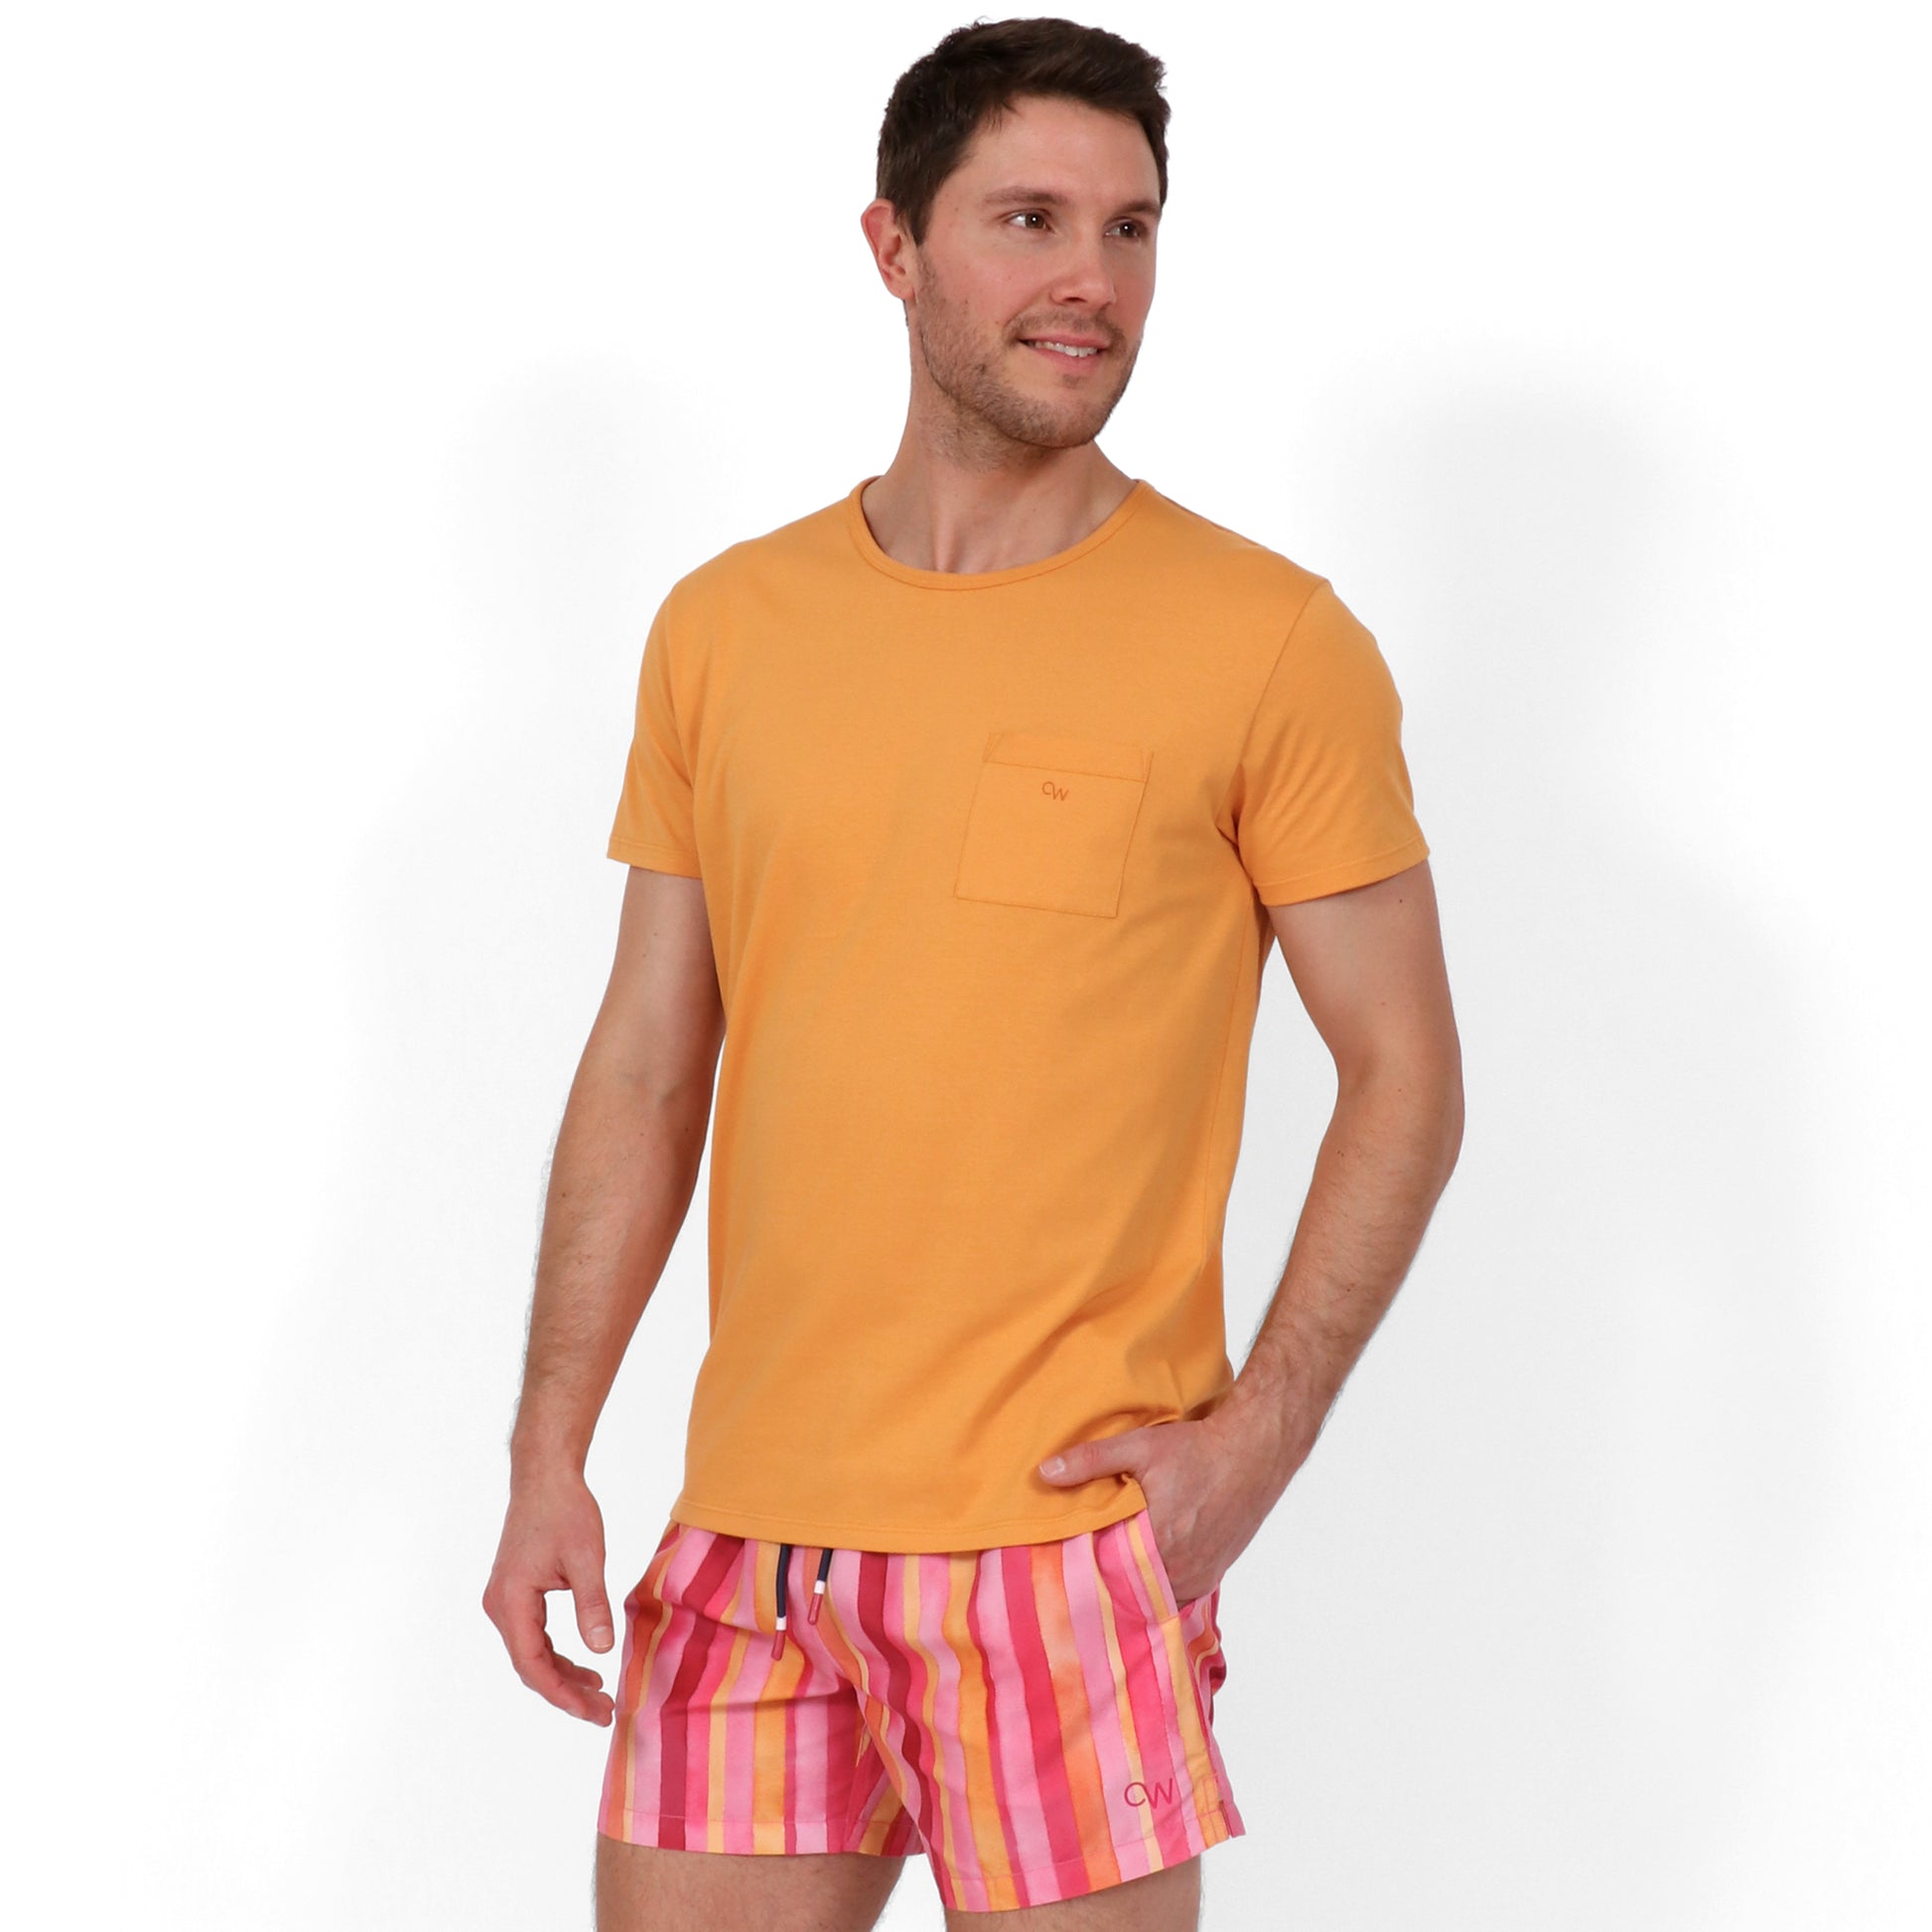 Original Weekend Organic Cotton Men's Pocket T-Shirt in Sunset Orange on Body Front View